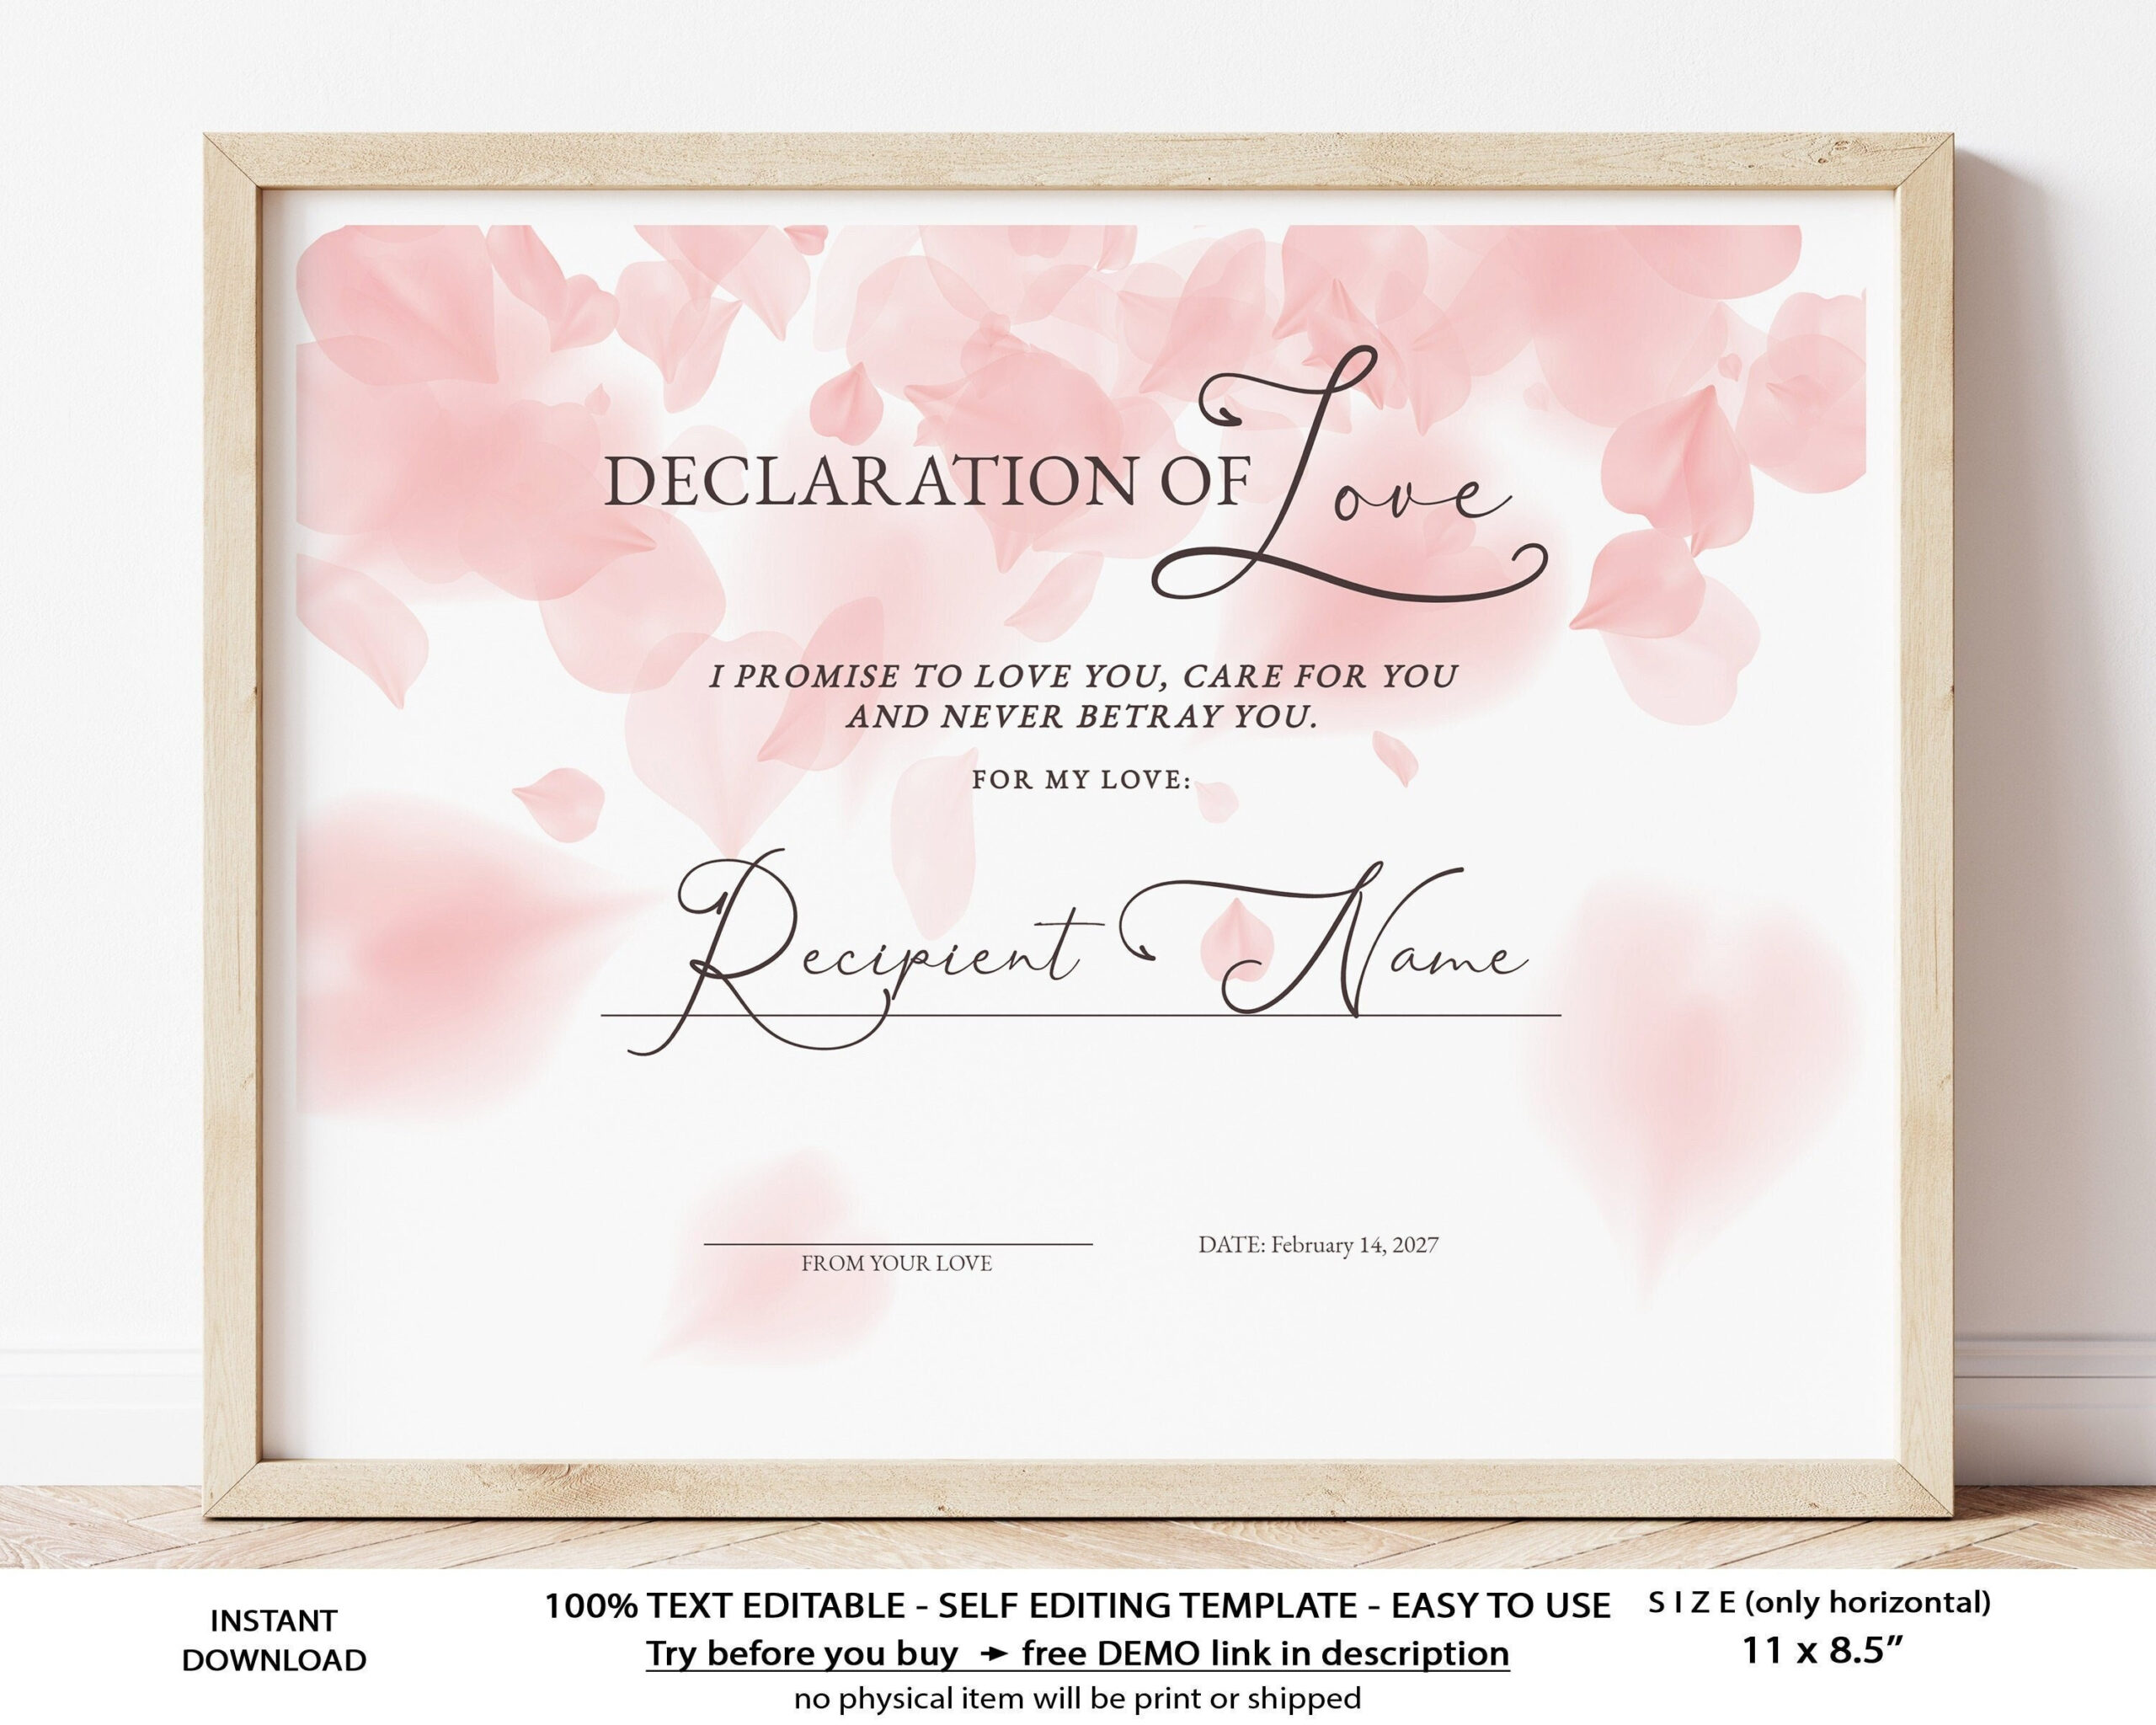 Certificate of LOVE Declaration of Love Valentine